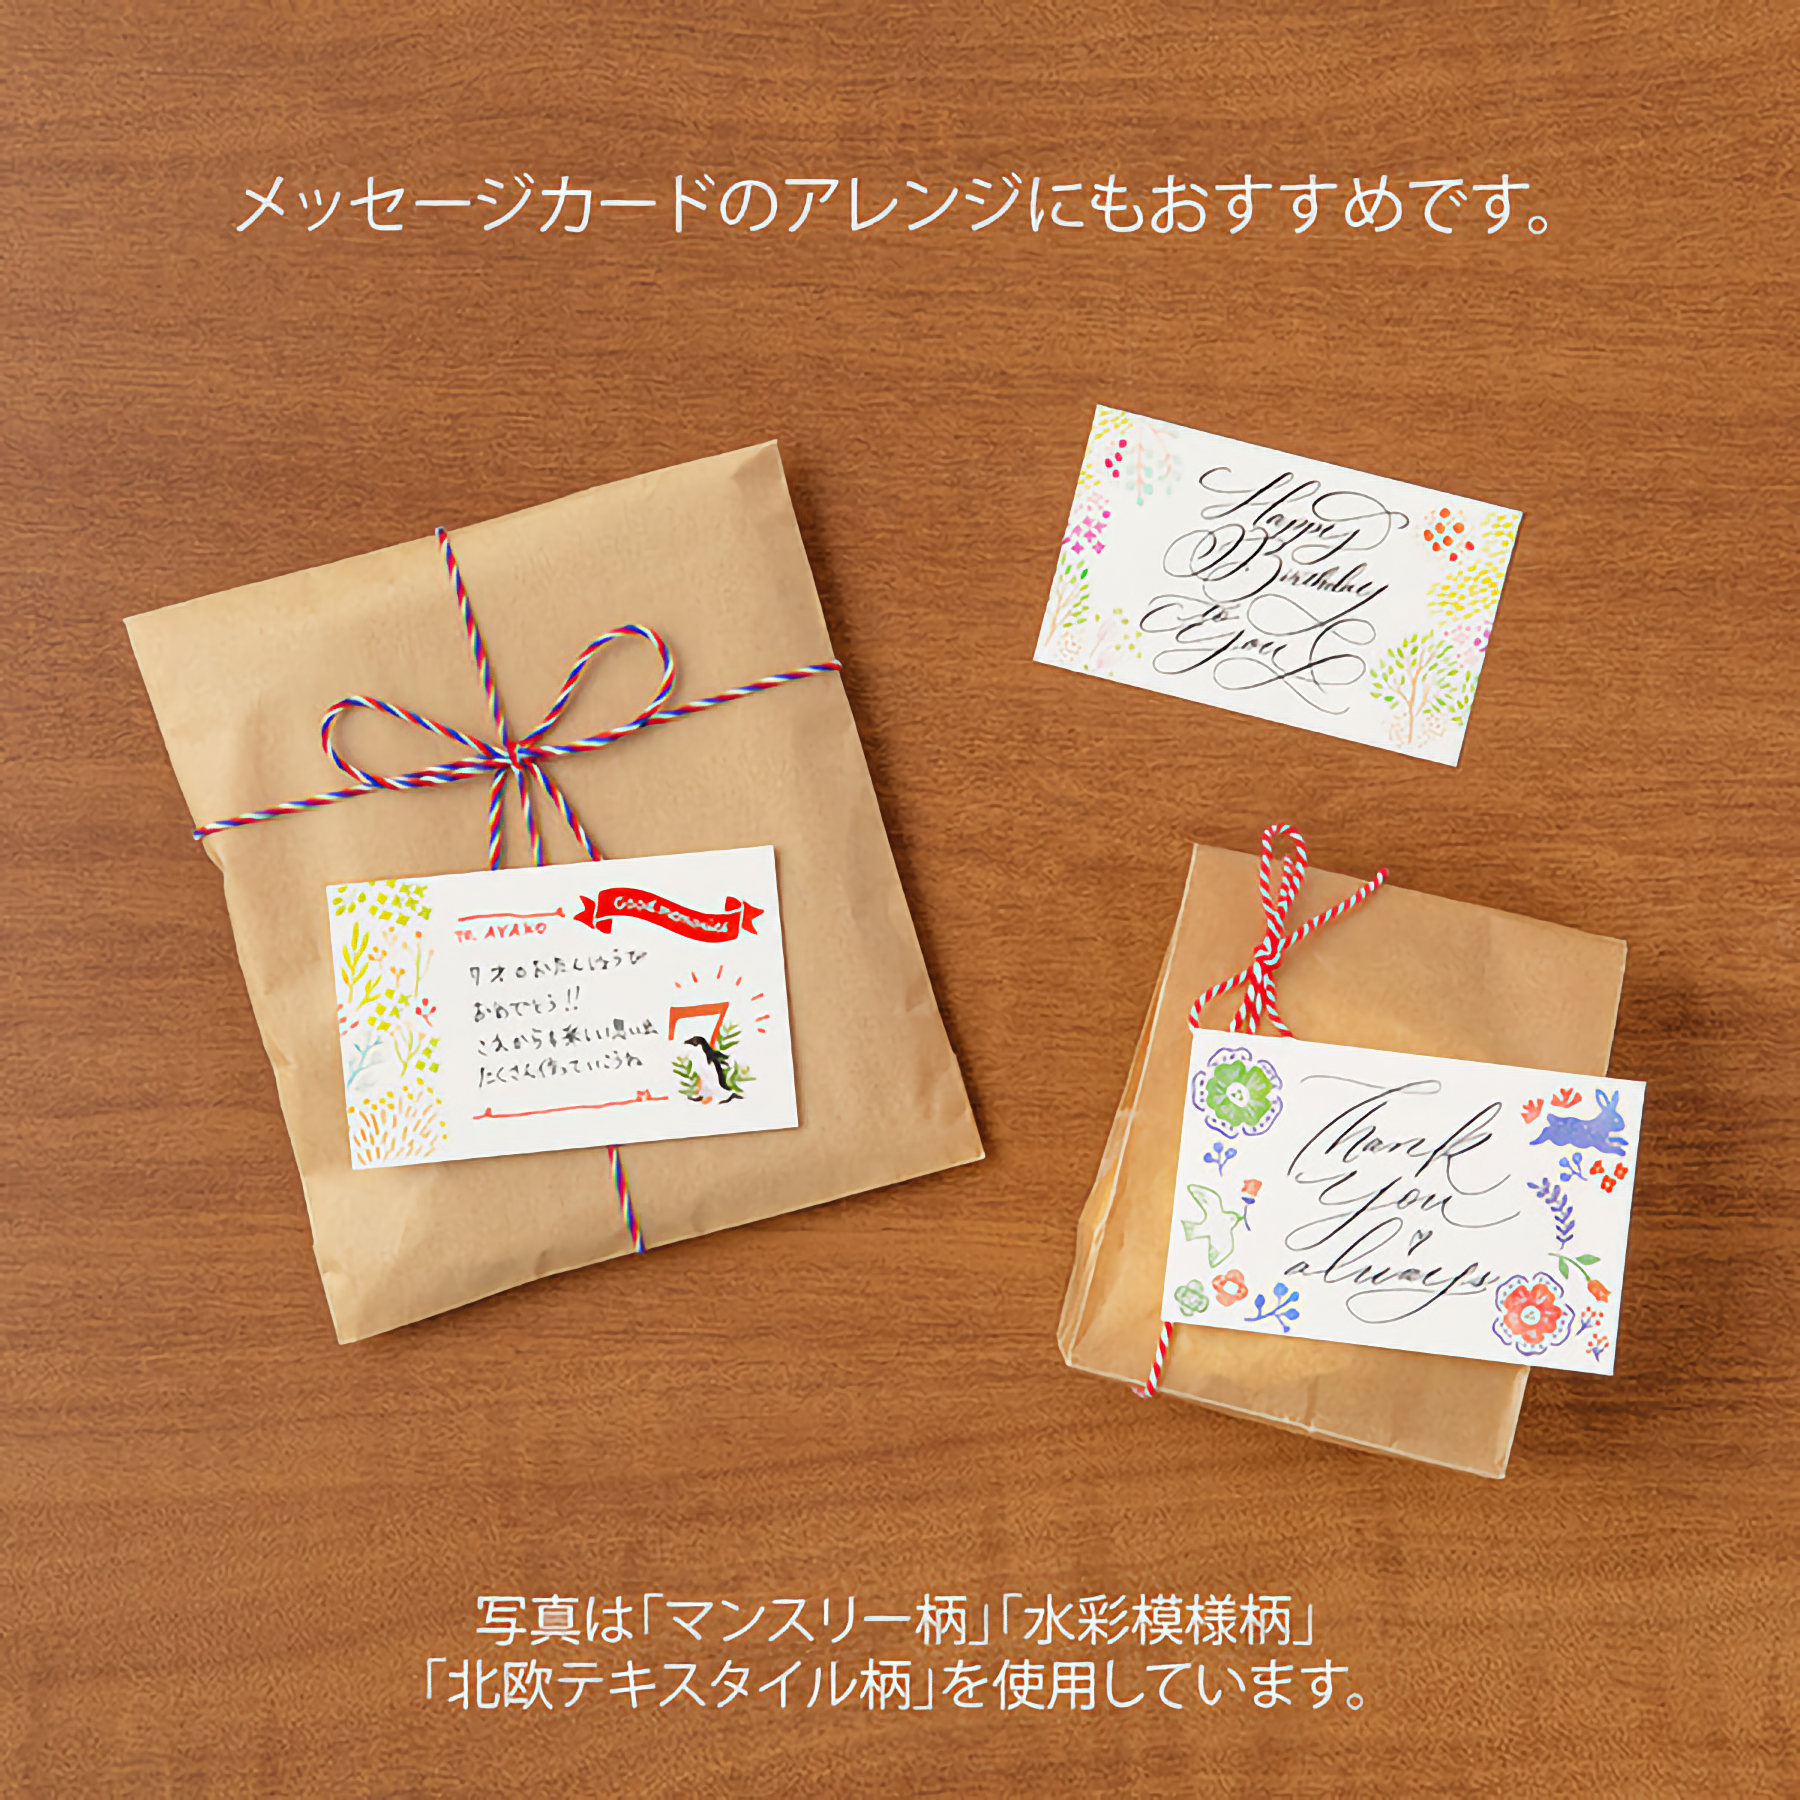 Midori Transfer Stickers Stationery